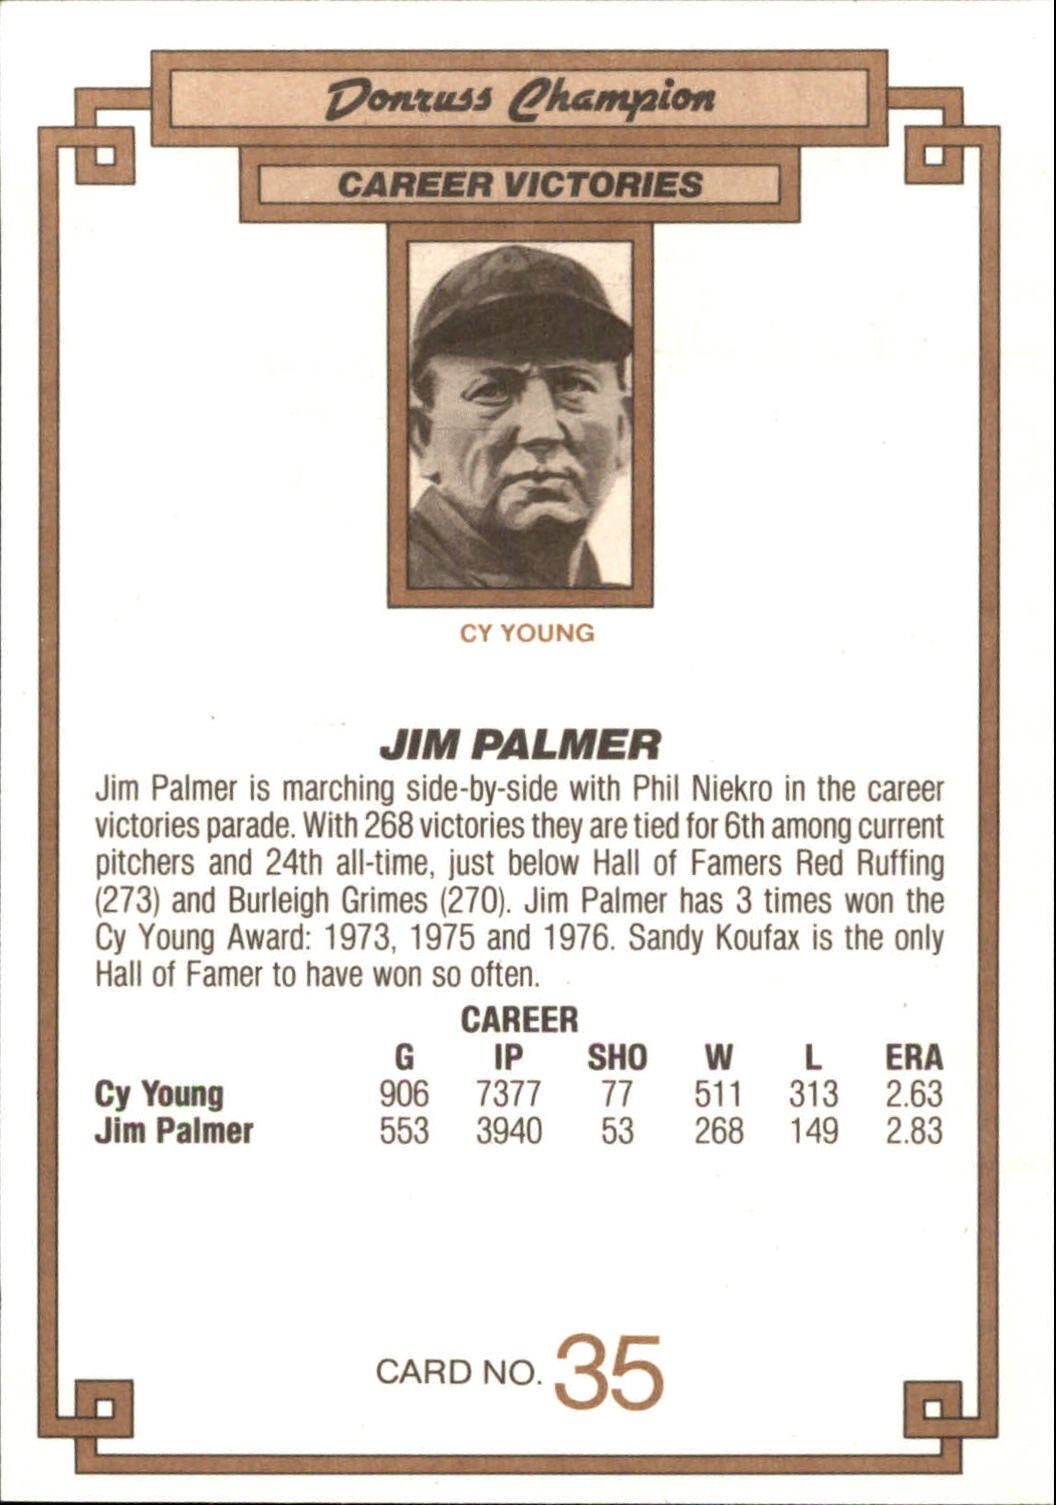 1984 DONRUSS CHAMPIONS "OVERSIZED CARD" #35 JIM PALMER  - BALTIMORE ORIOLES-